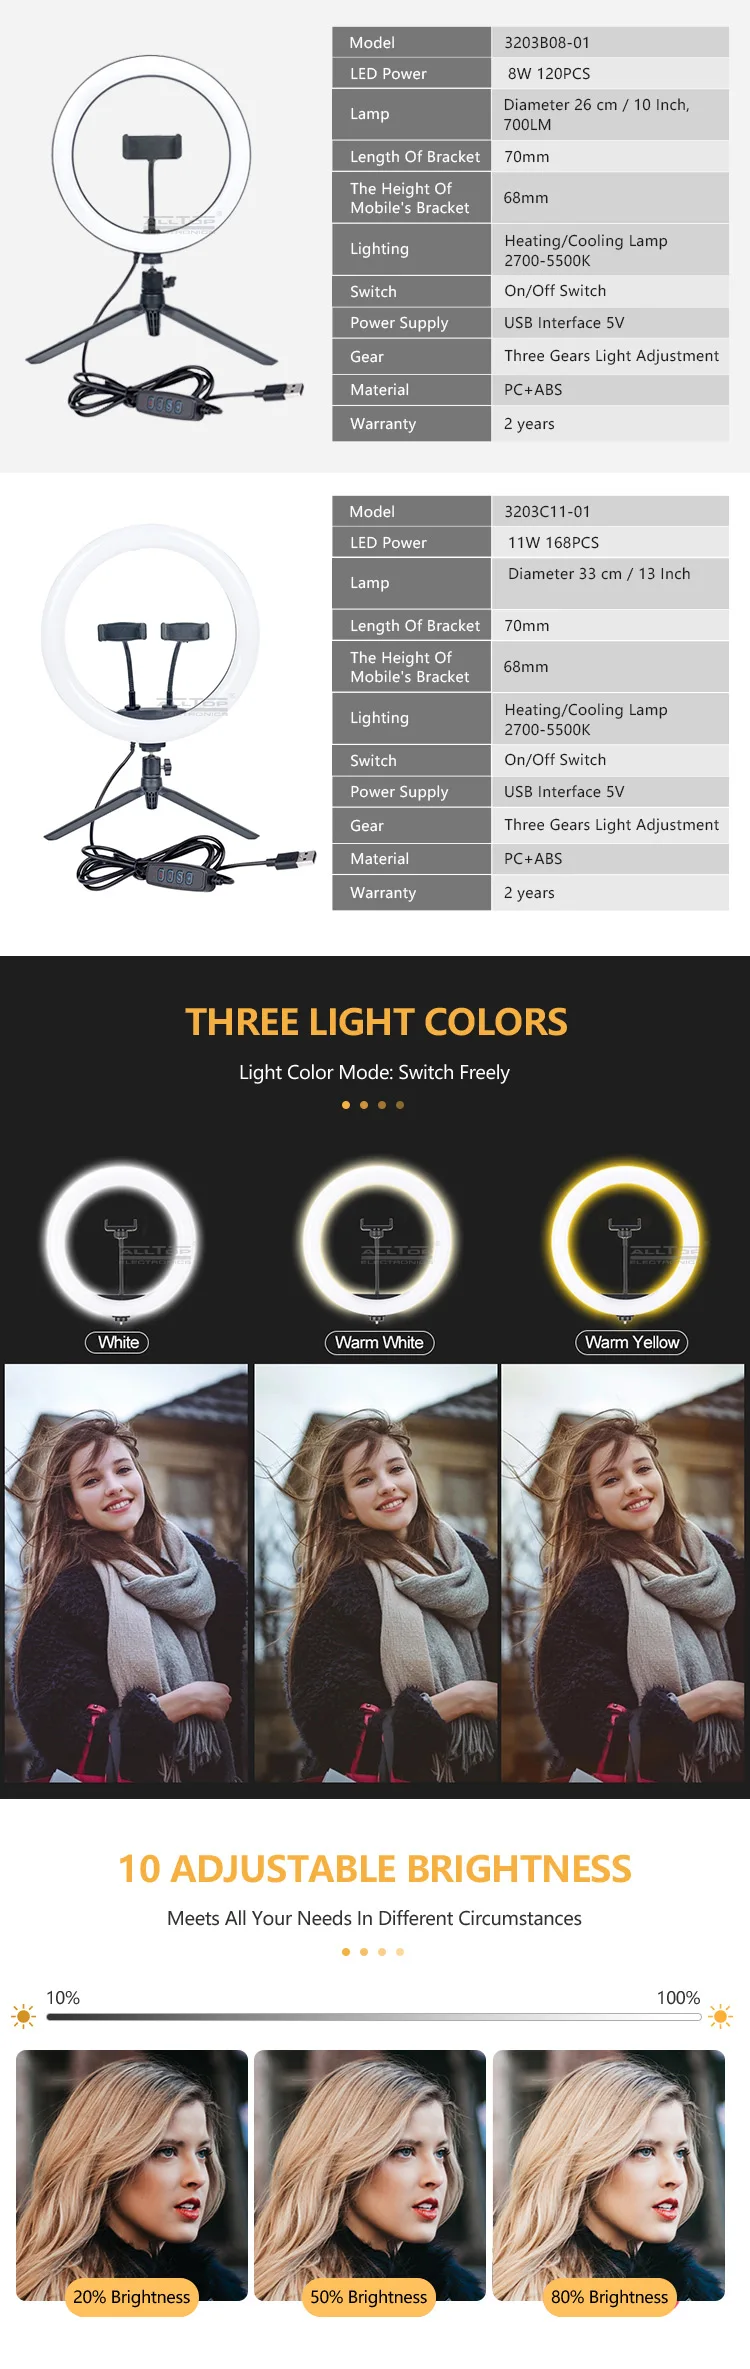 Photographic lighting kit beauty lamp 26cm / 10 Inch indoor selfie led ring light